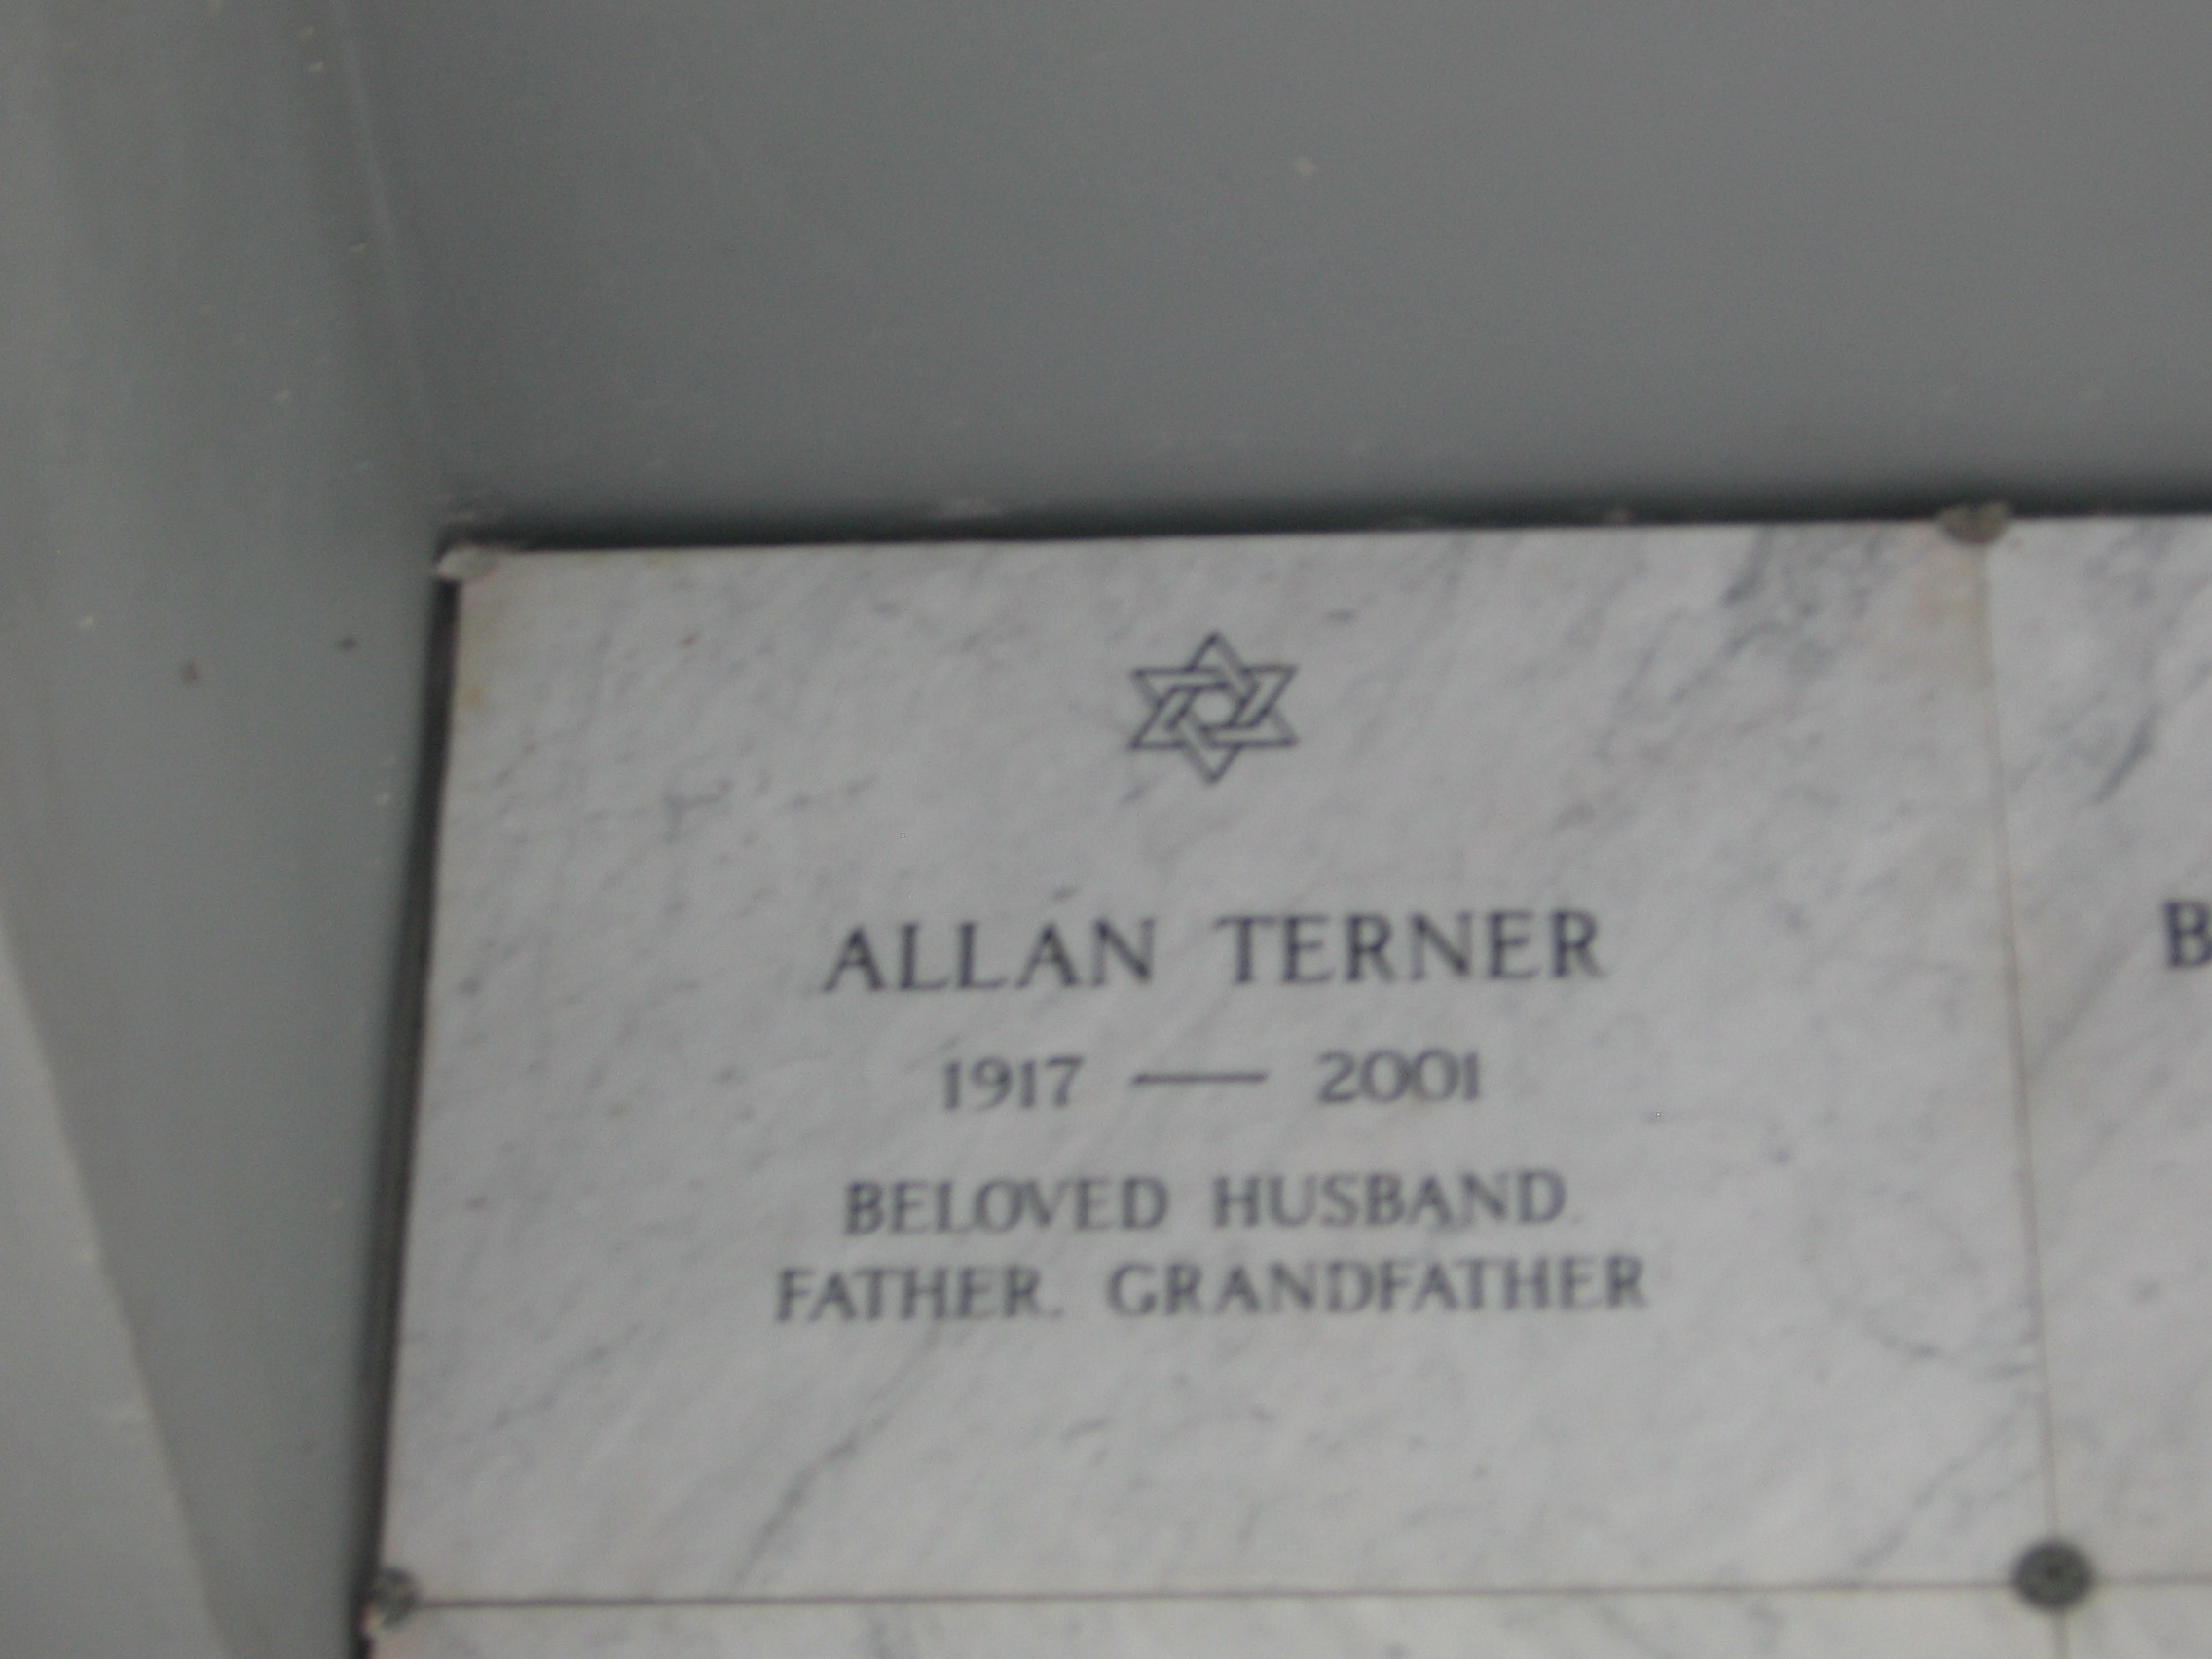 Allan Terner